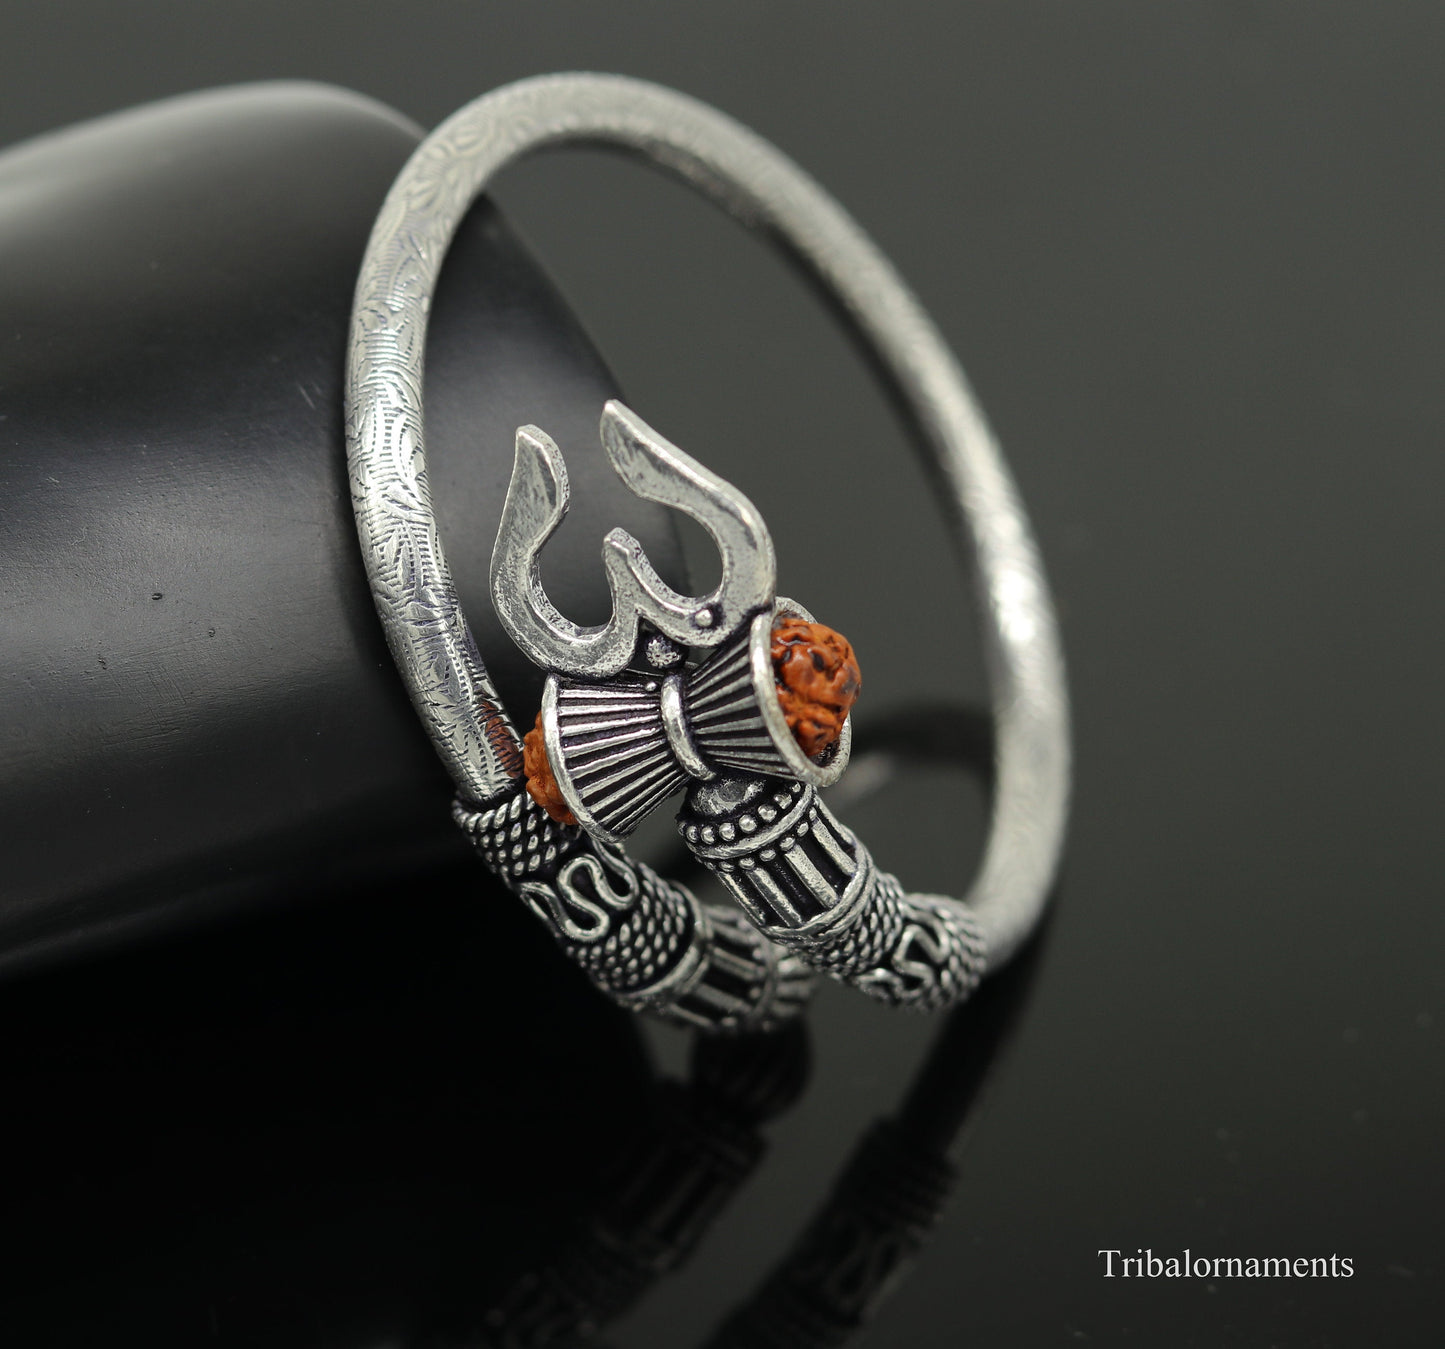 Lord Shiva trident design 925 sterling silver handmade bangle bracelet ,fabulous custom made oxidized unisex vintage design jewelry nsk248 - TRIBAL ORNAMENTS